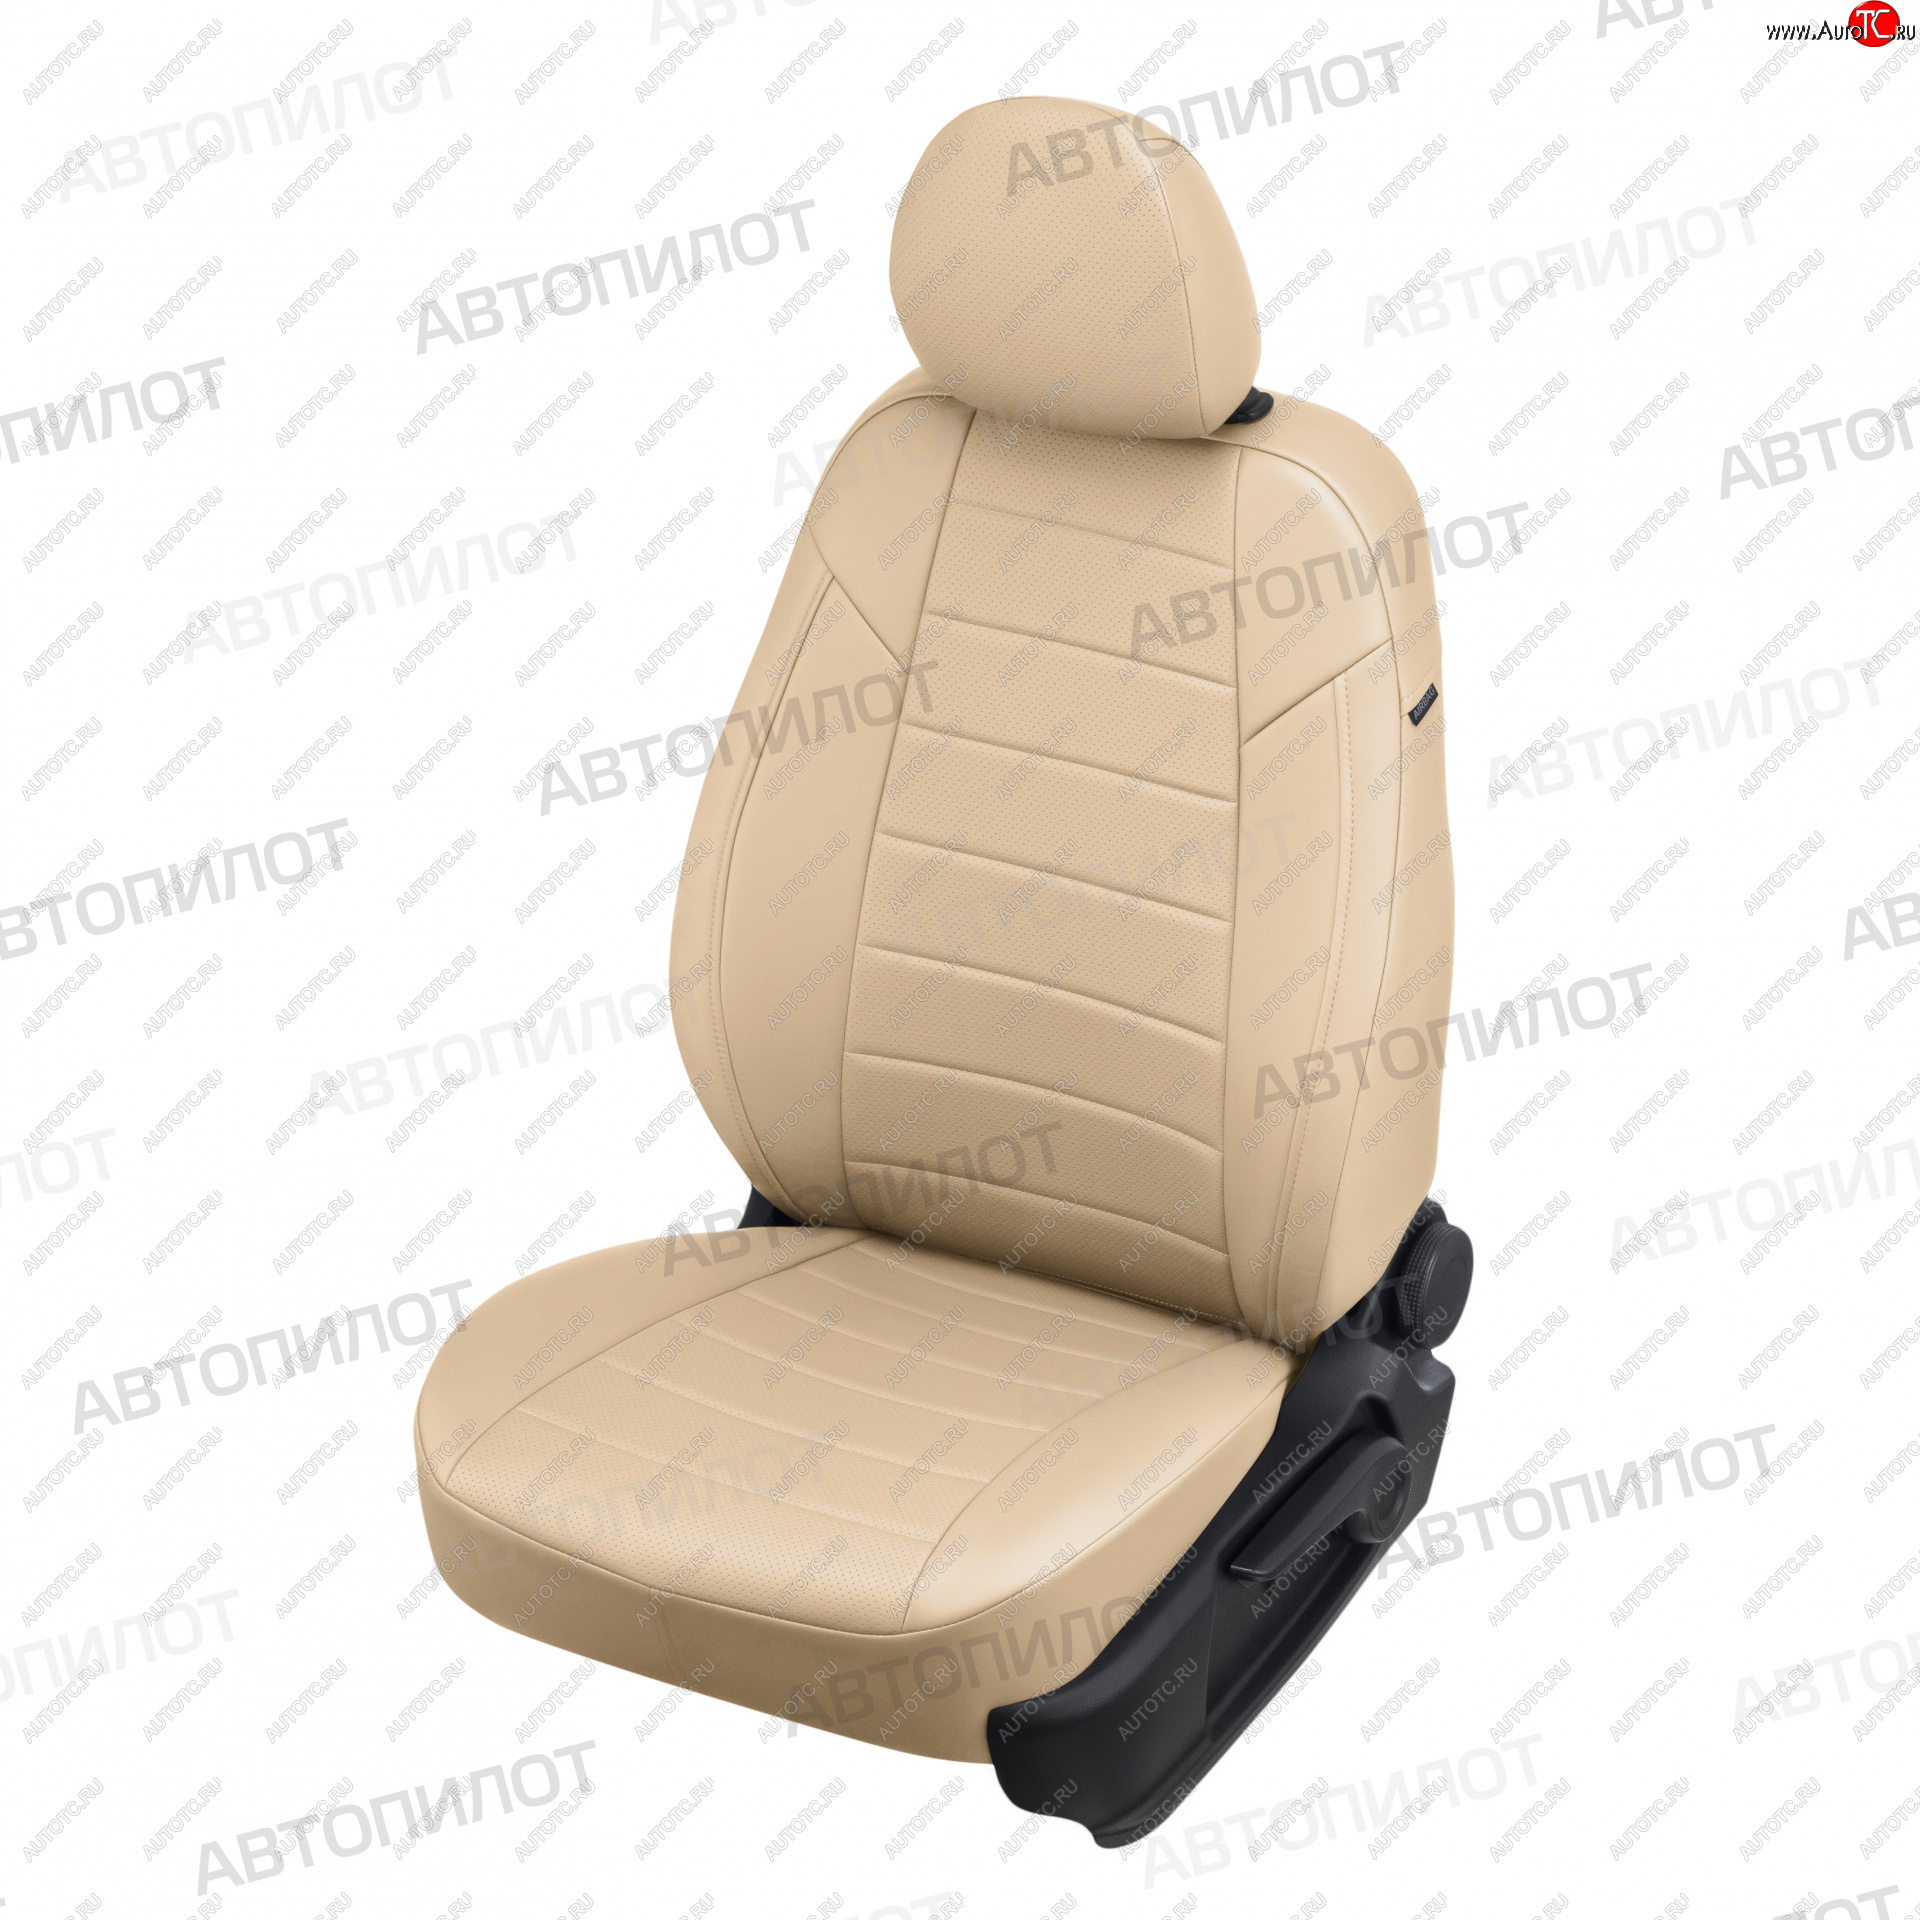 13 449 р. Чехлы сидений (экокожа, Classic) Автопилот  KIA Cerato  3 YD (2013-2019) (бежевый)